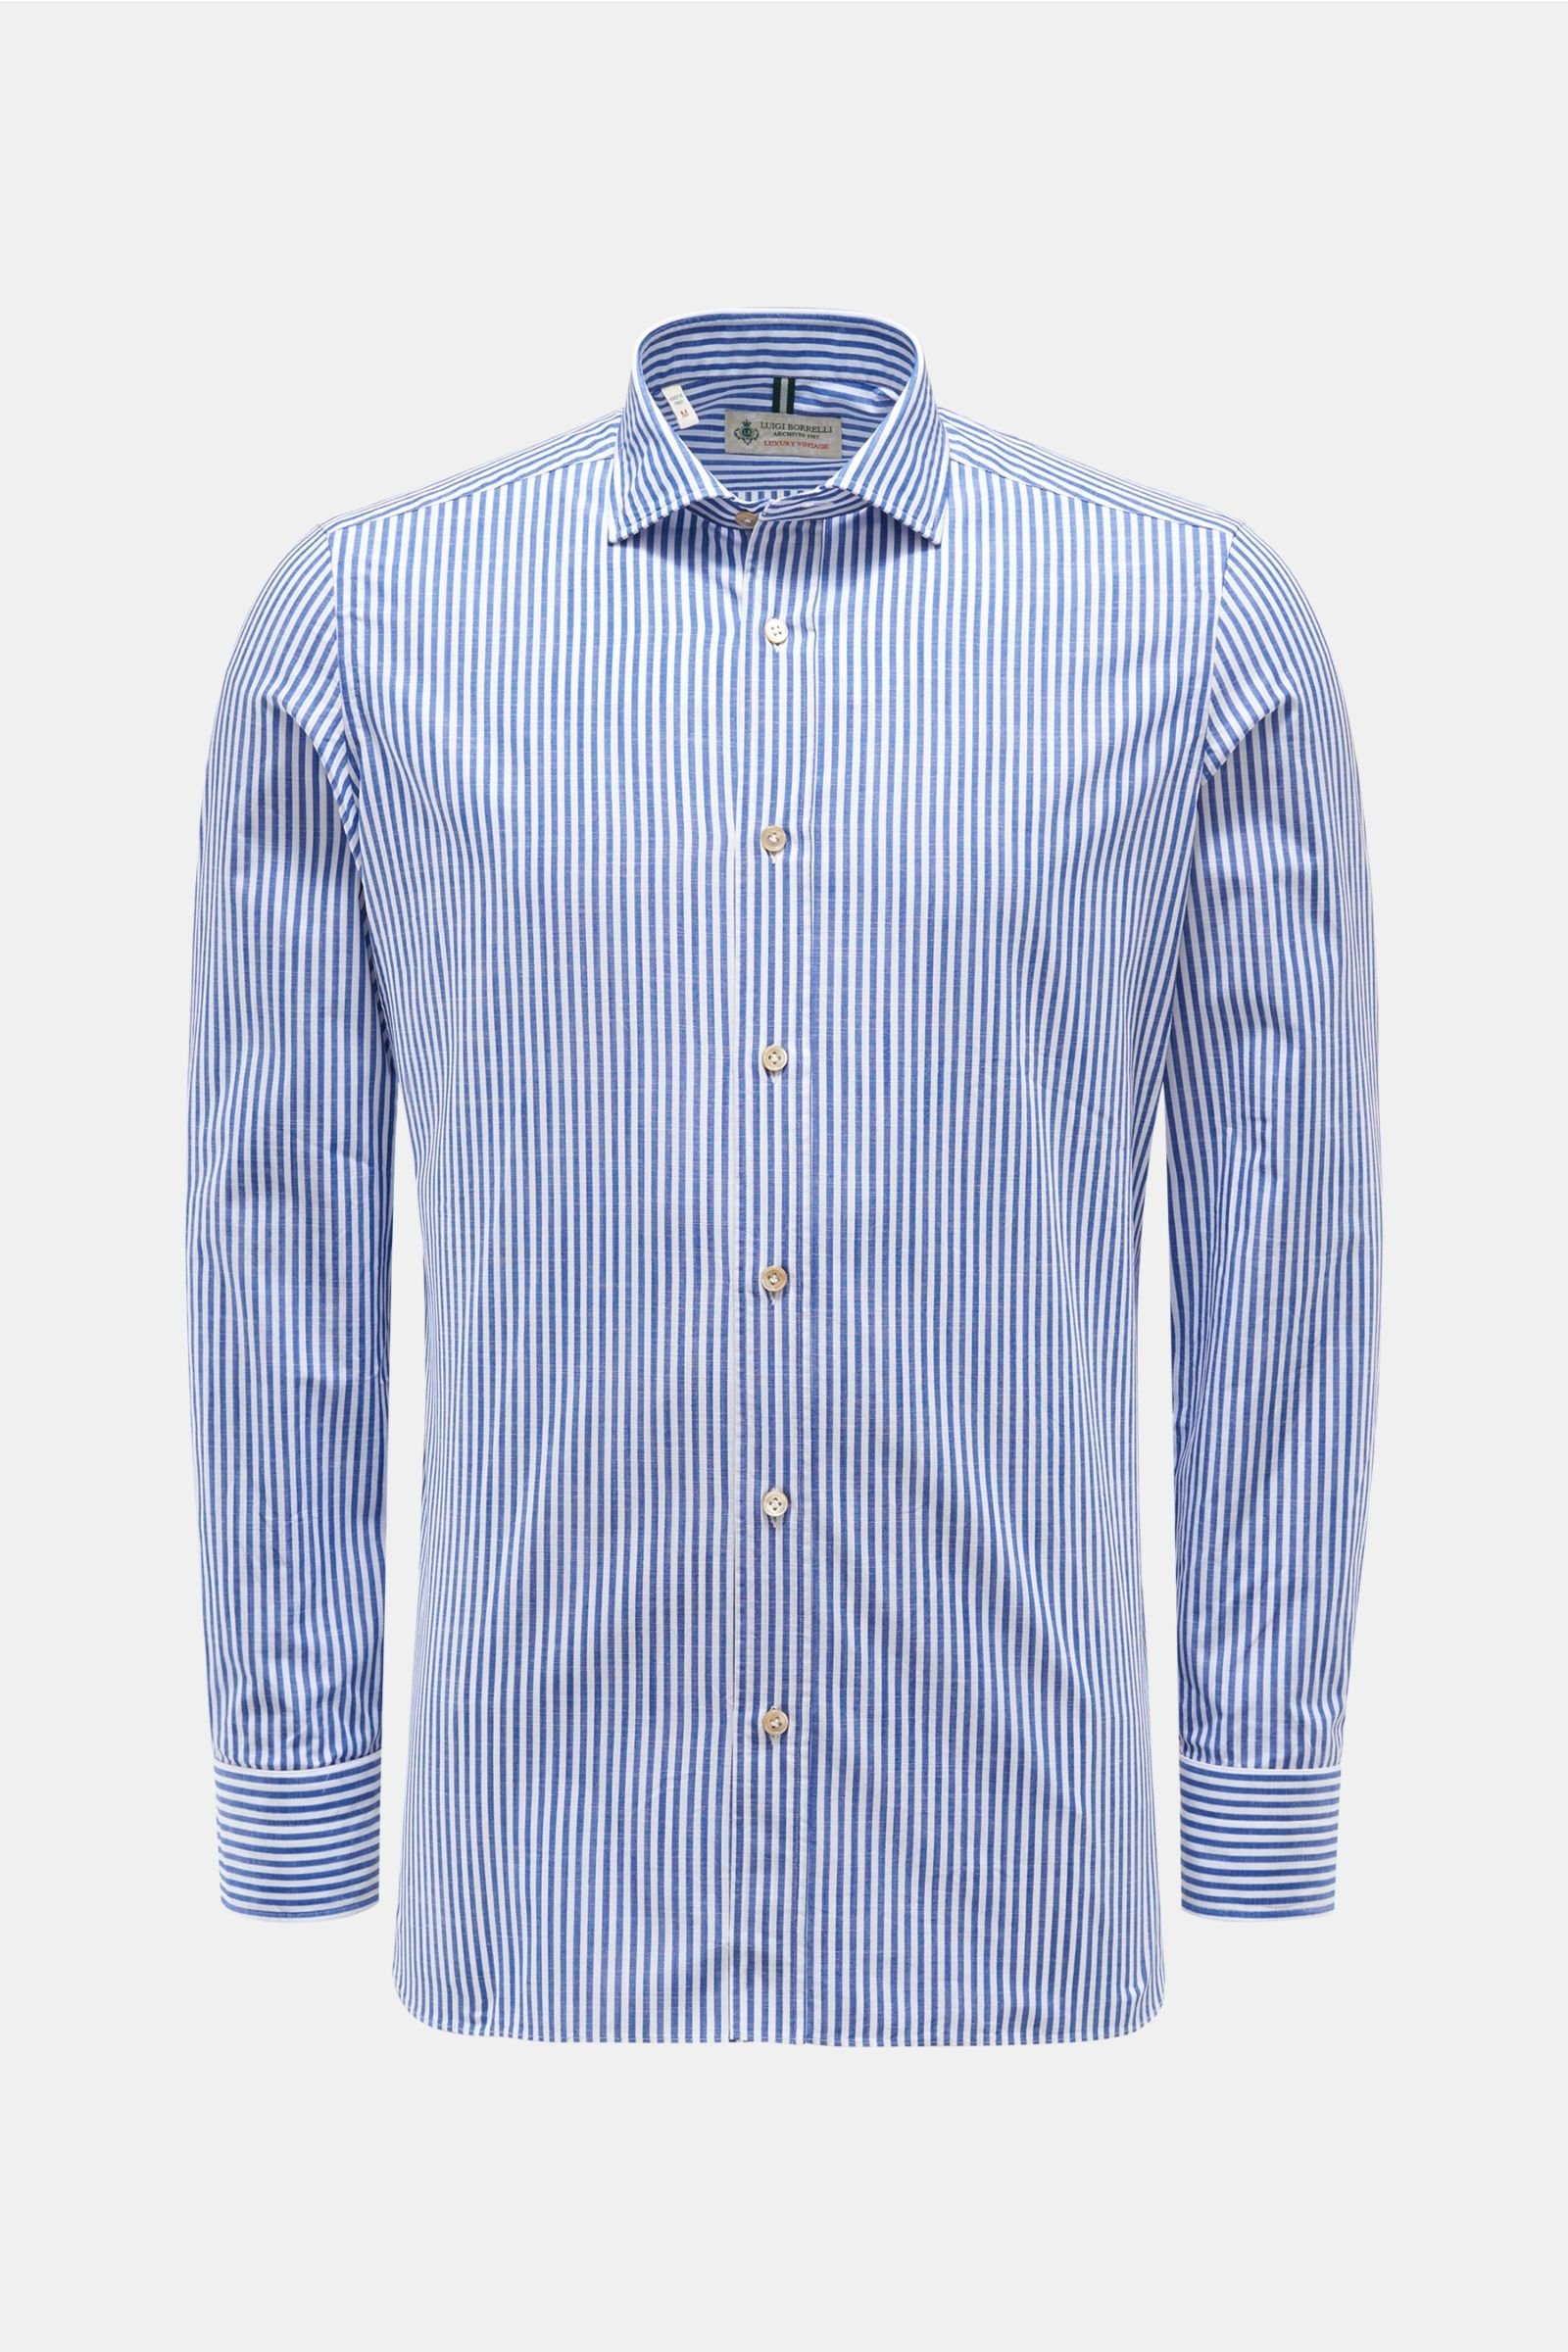 Casual shirt shark collar white/dark blue striped